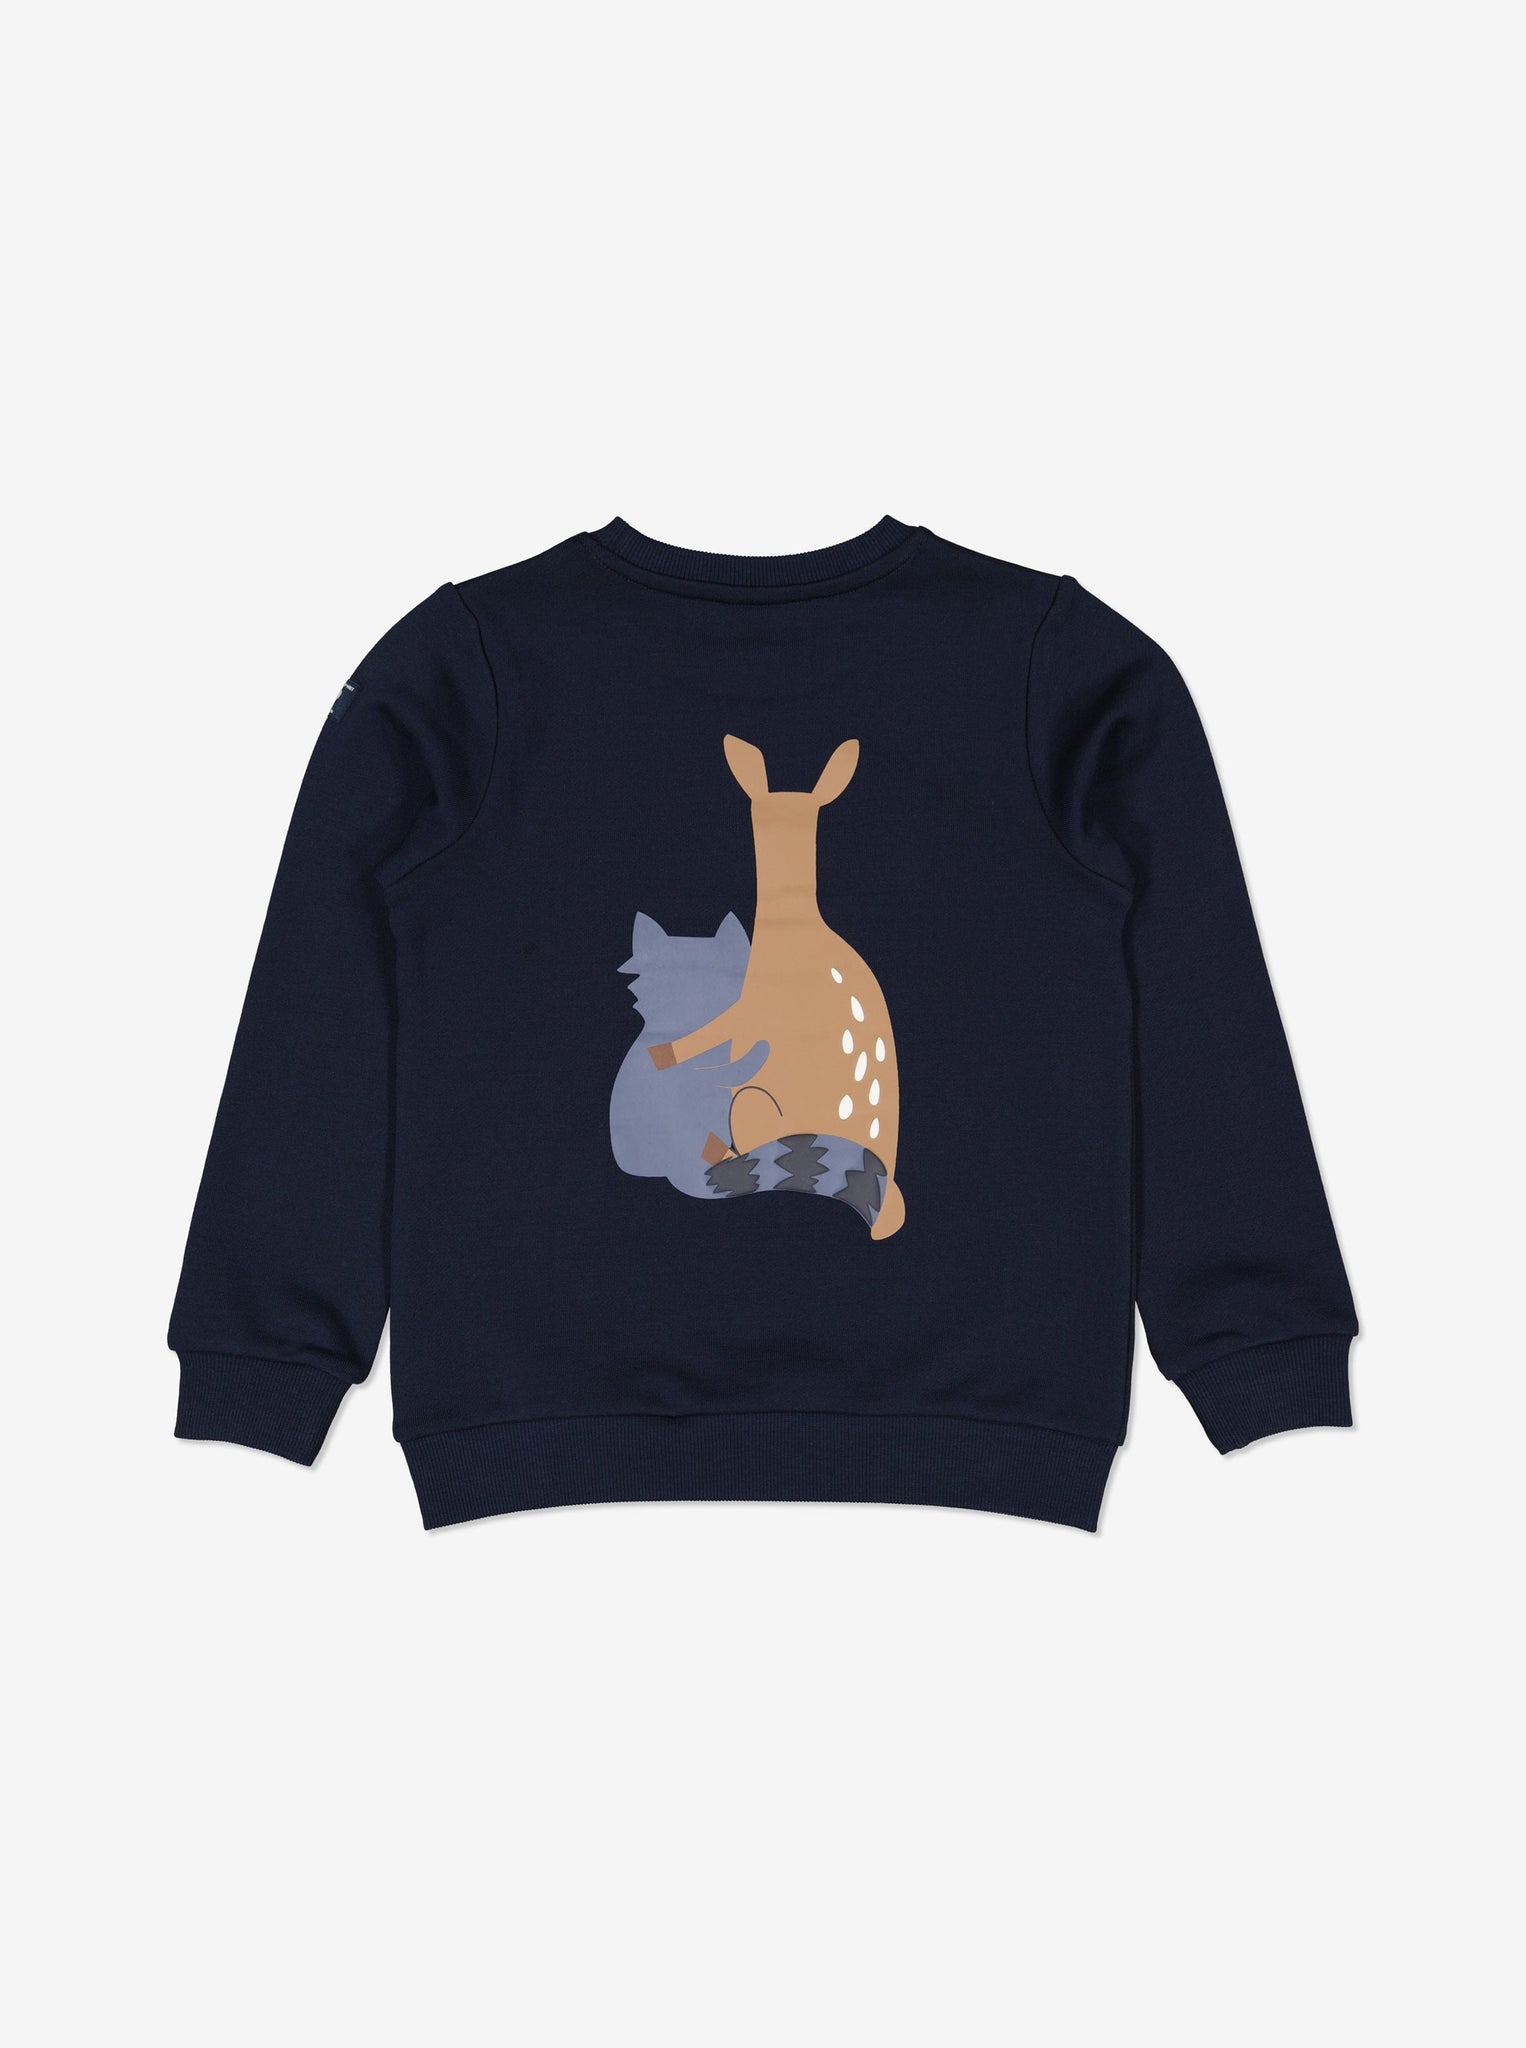  Navy Animal Print Kids Sweatshirt from Polarn O. Pyret Kidswear. Made using eco-friendly materials.